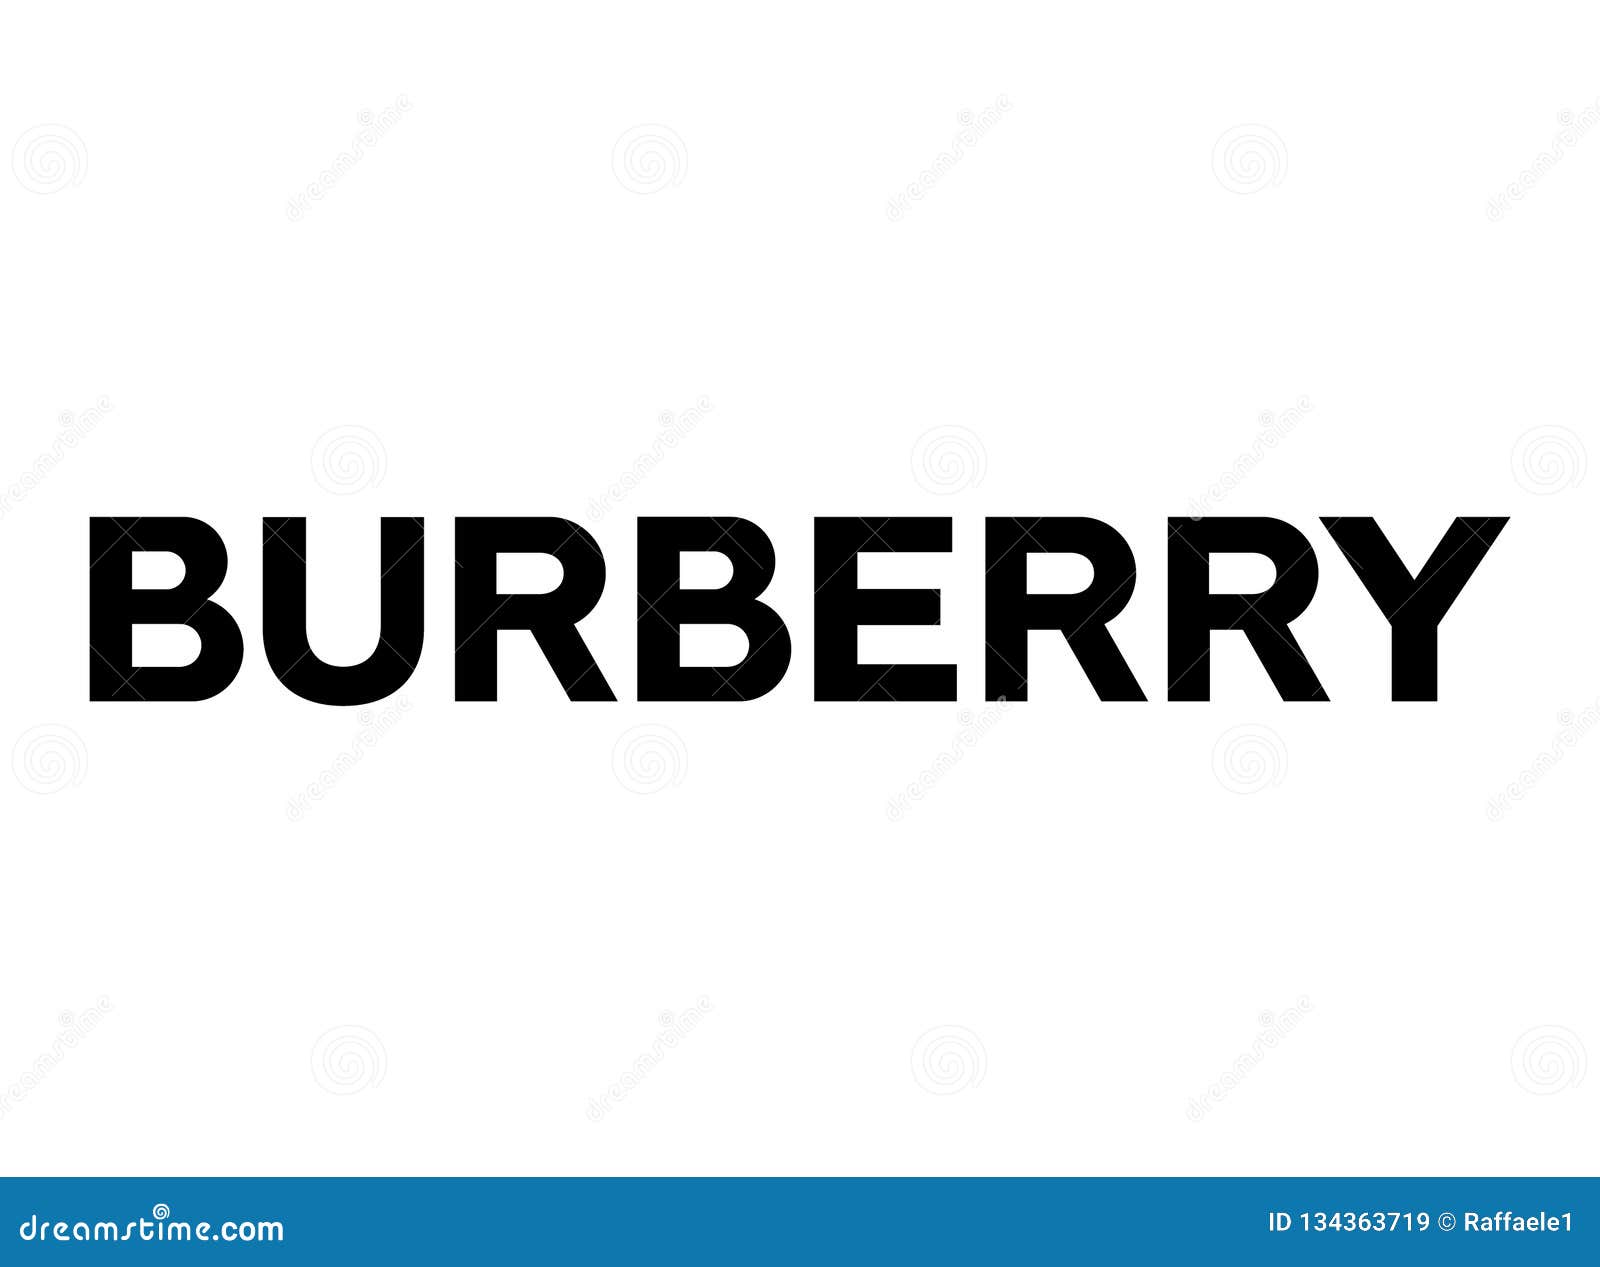 Burberry Logo editorial stock image. Illustration of logo - 134363719